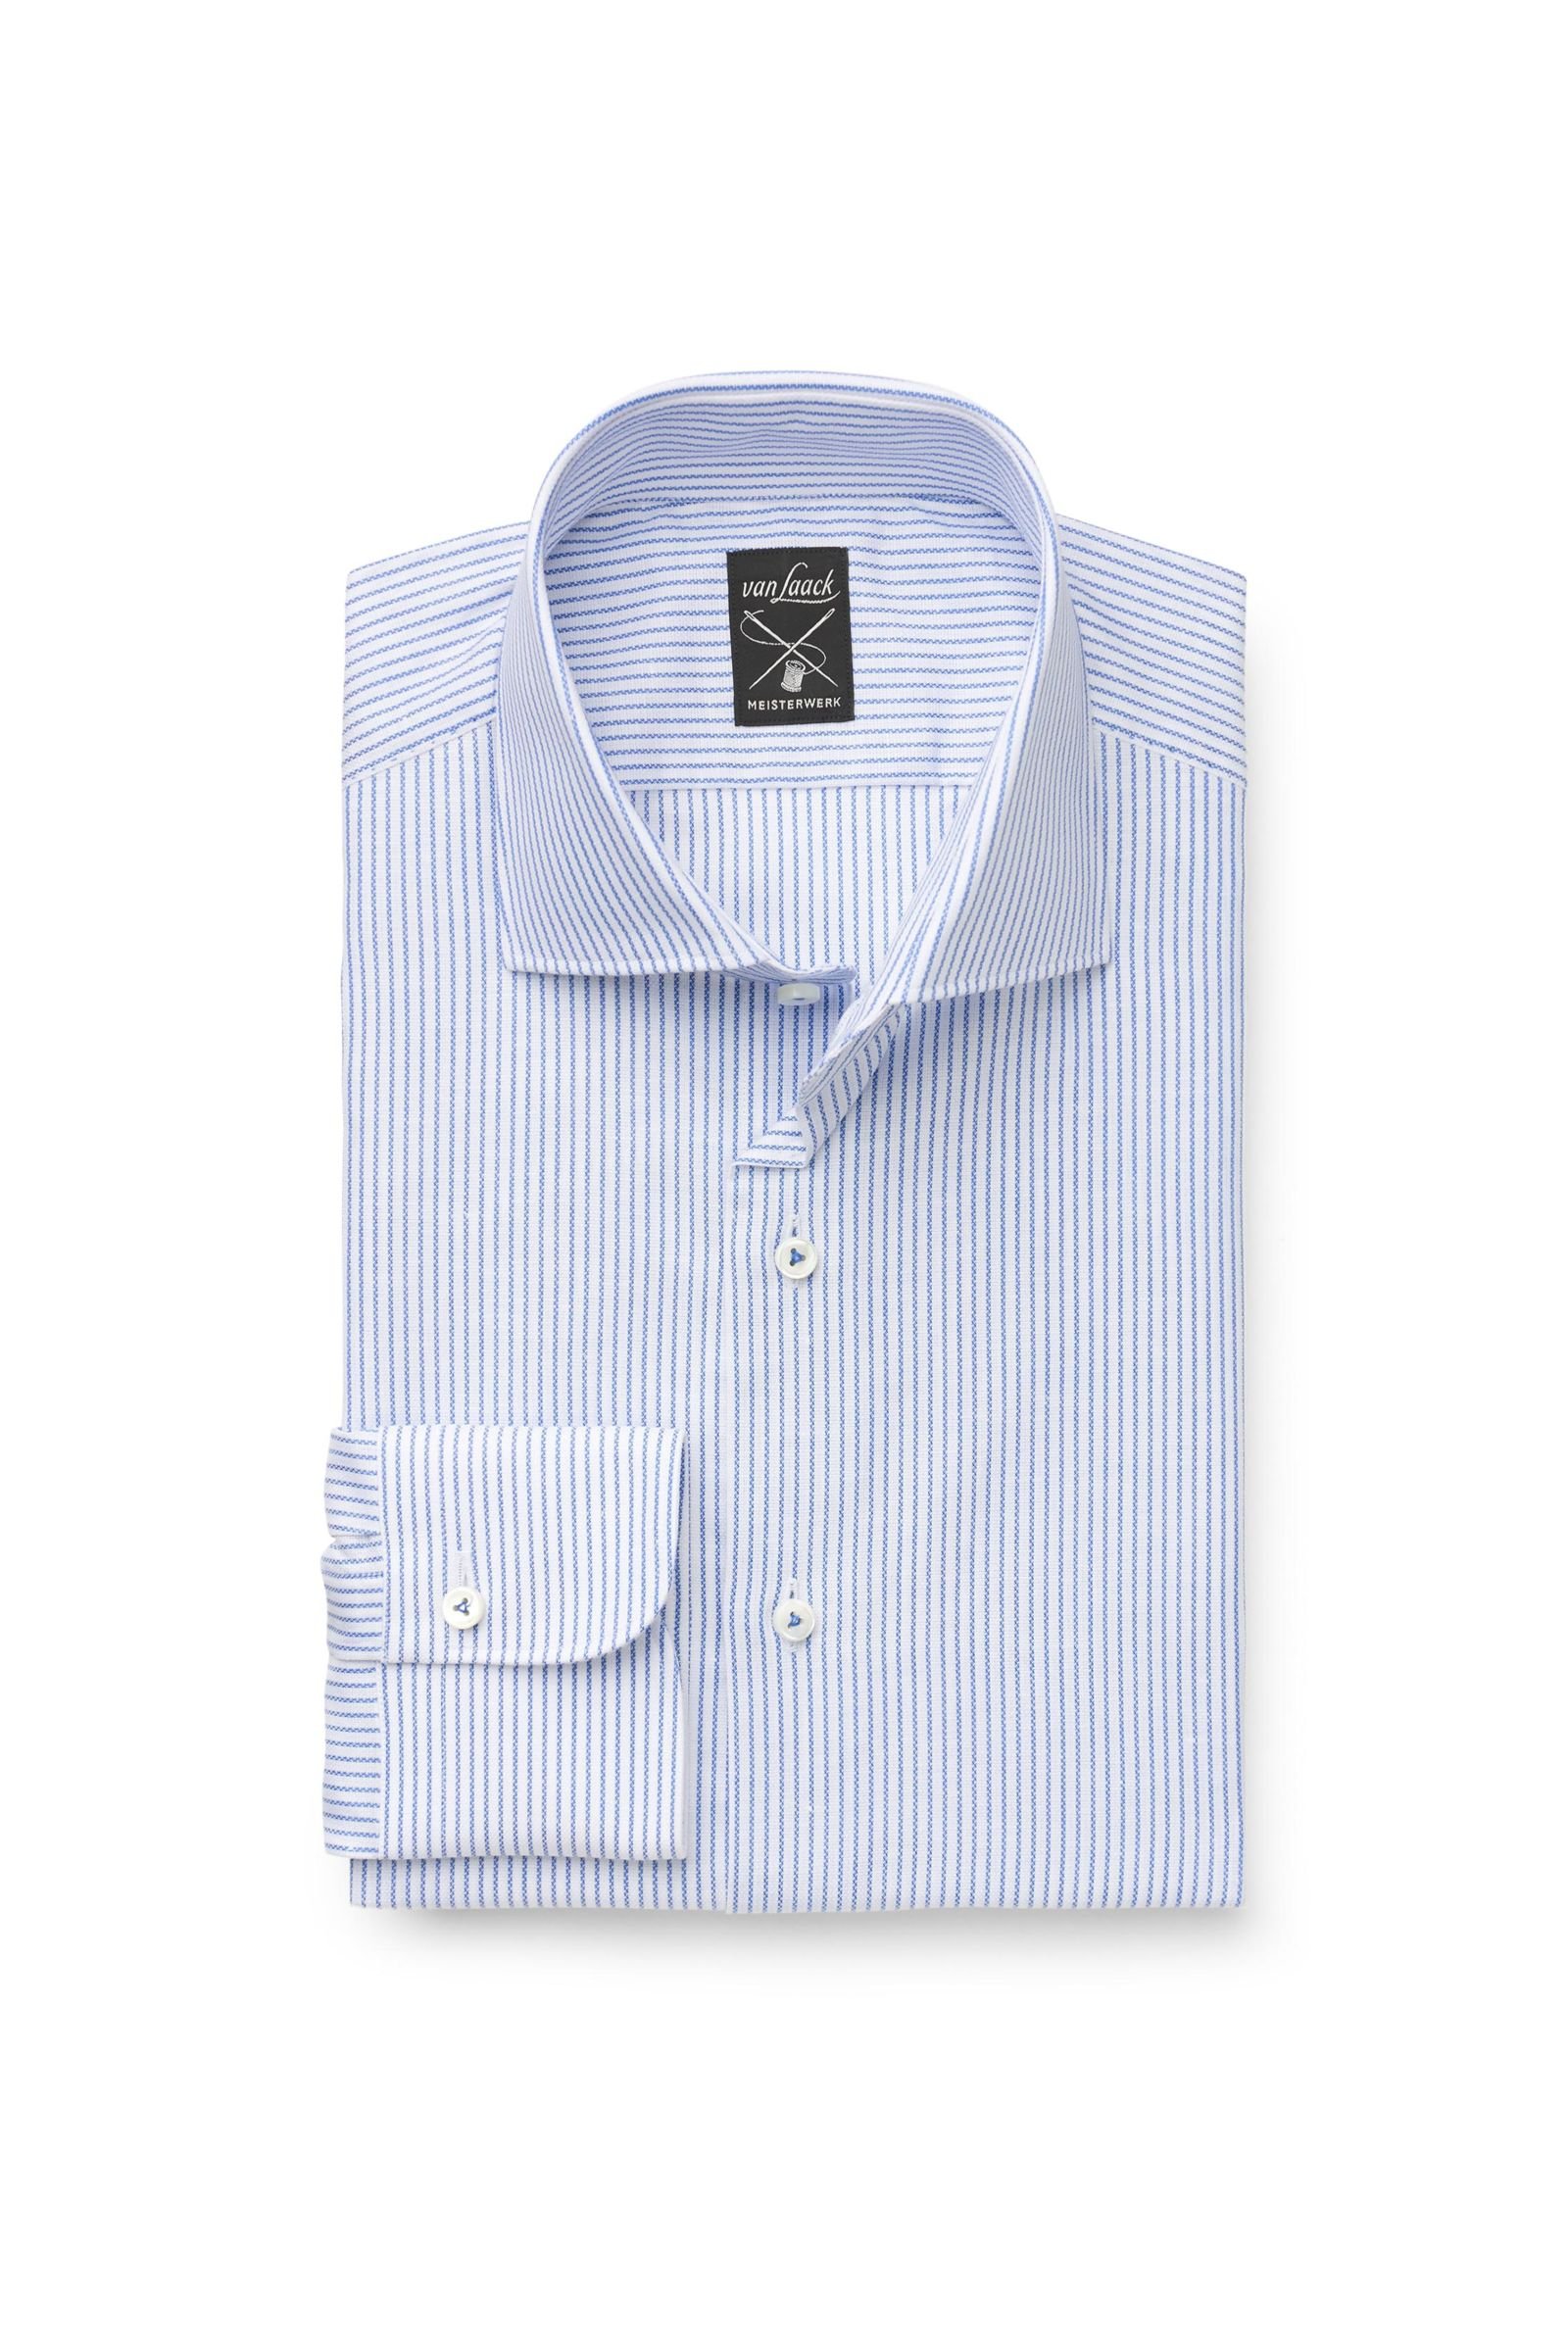 Business shirt 'Mivara Tailor Fit' shark collar white/blue striped